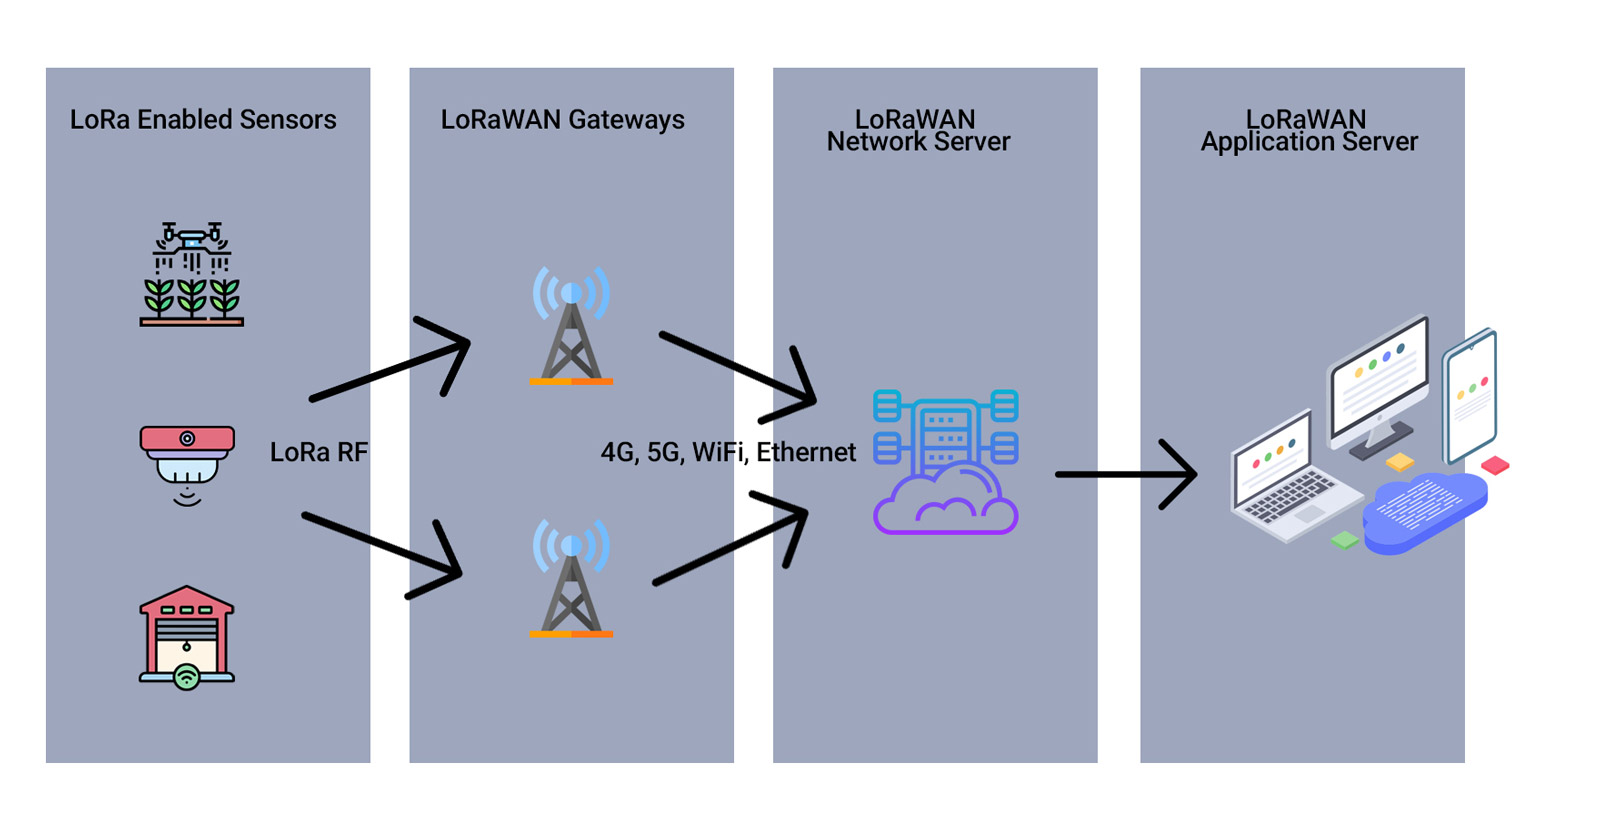 LoRa Enabled Sensors and LoRaWAN Gateways